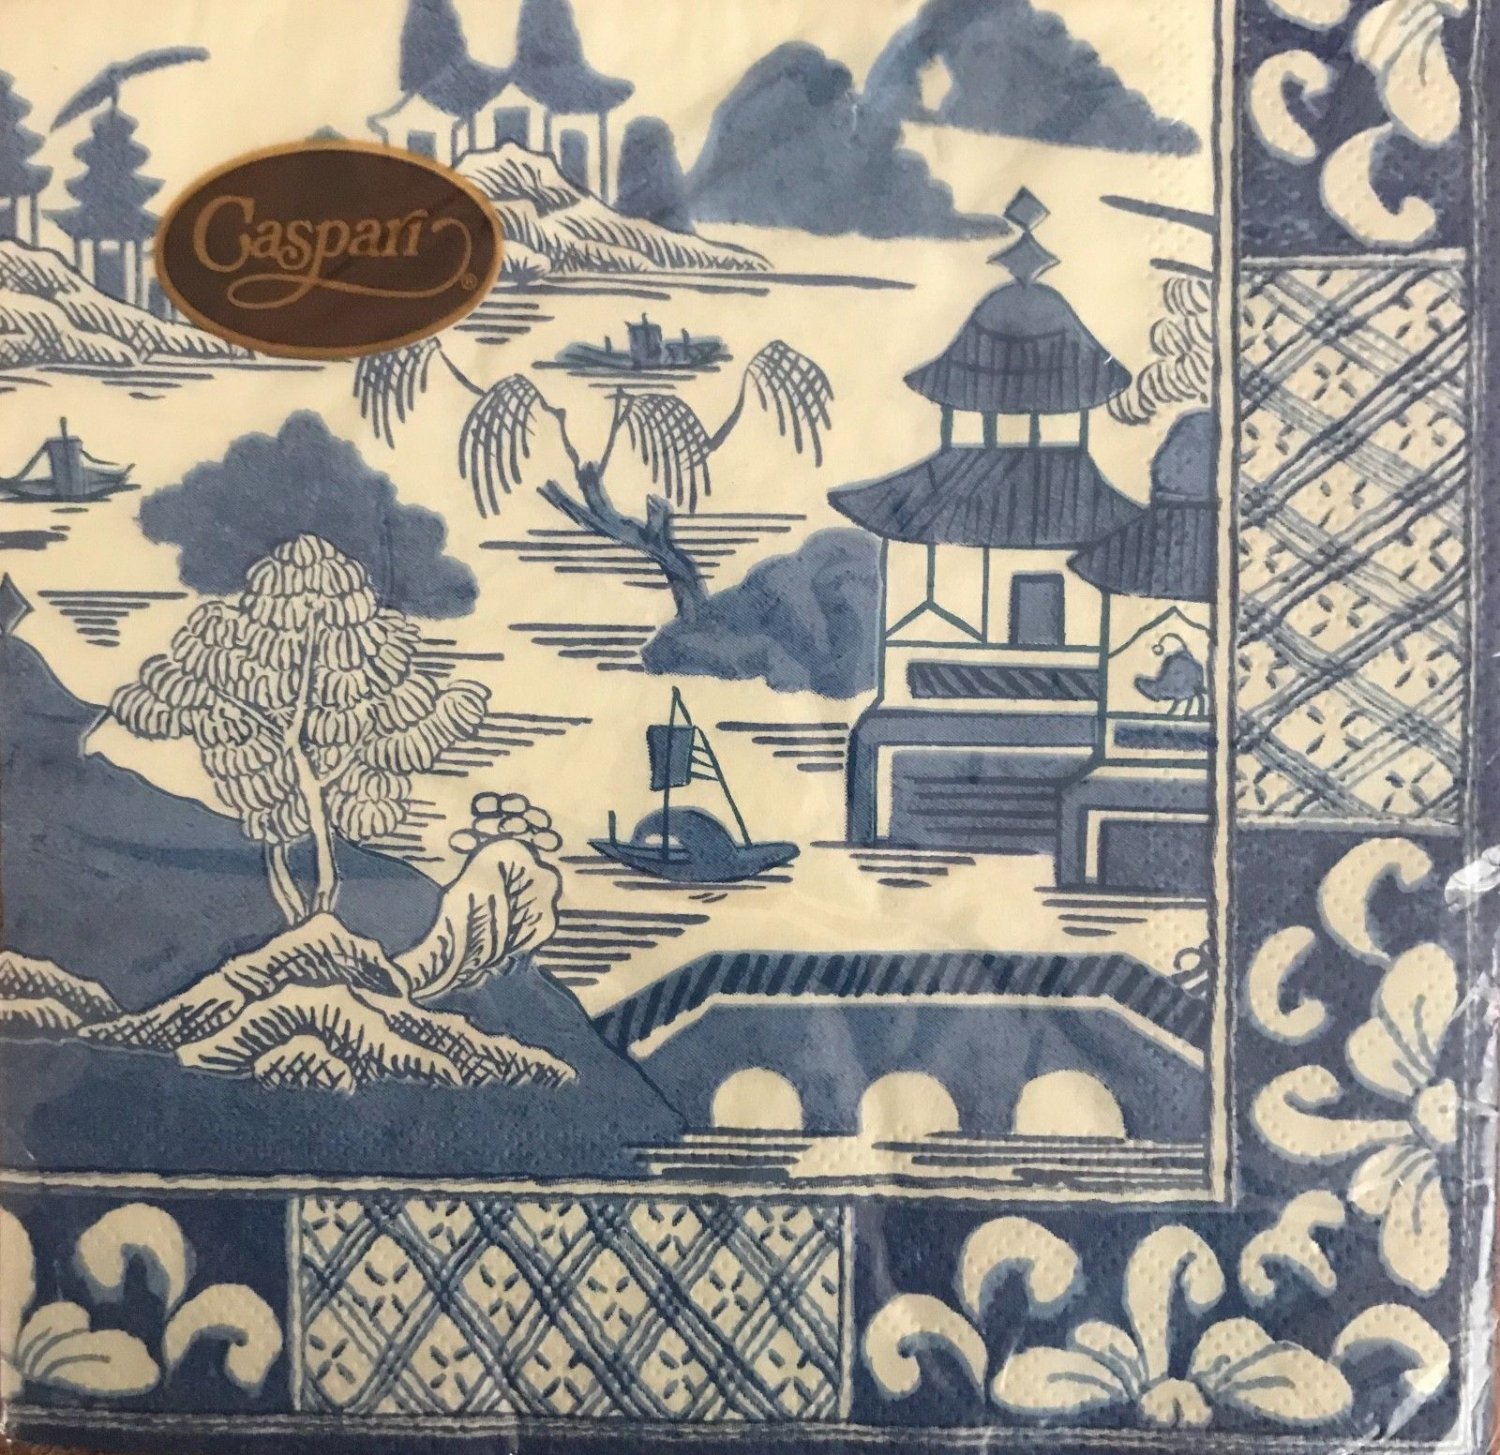 Blue Willow Decoupage Vintage Tissue Paper